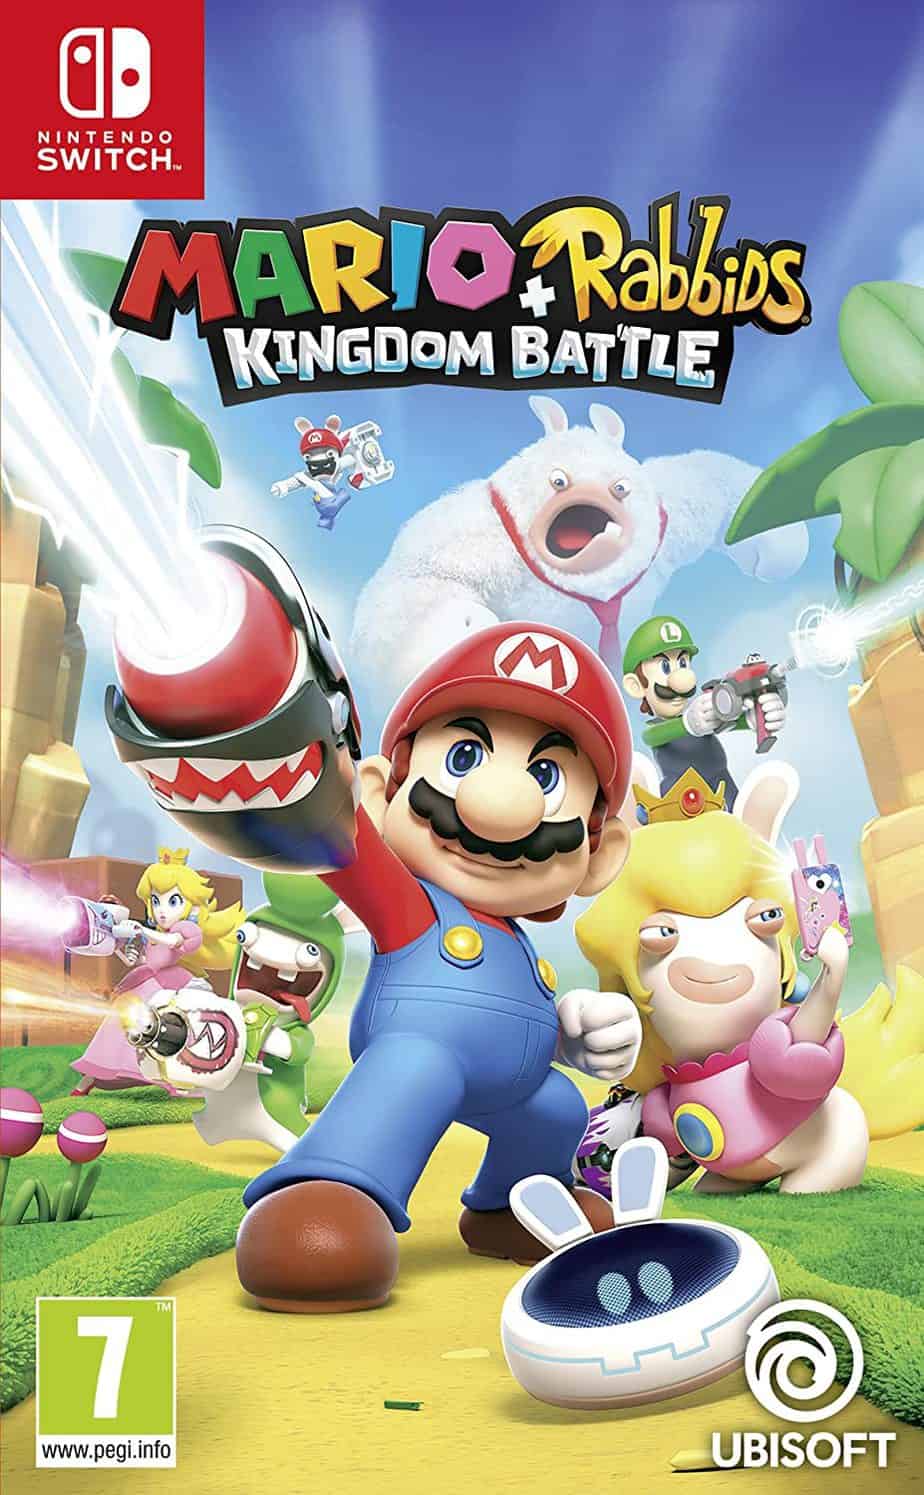 Best Mario multiplayer games - Mario + Rabbids Kingdom Battle